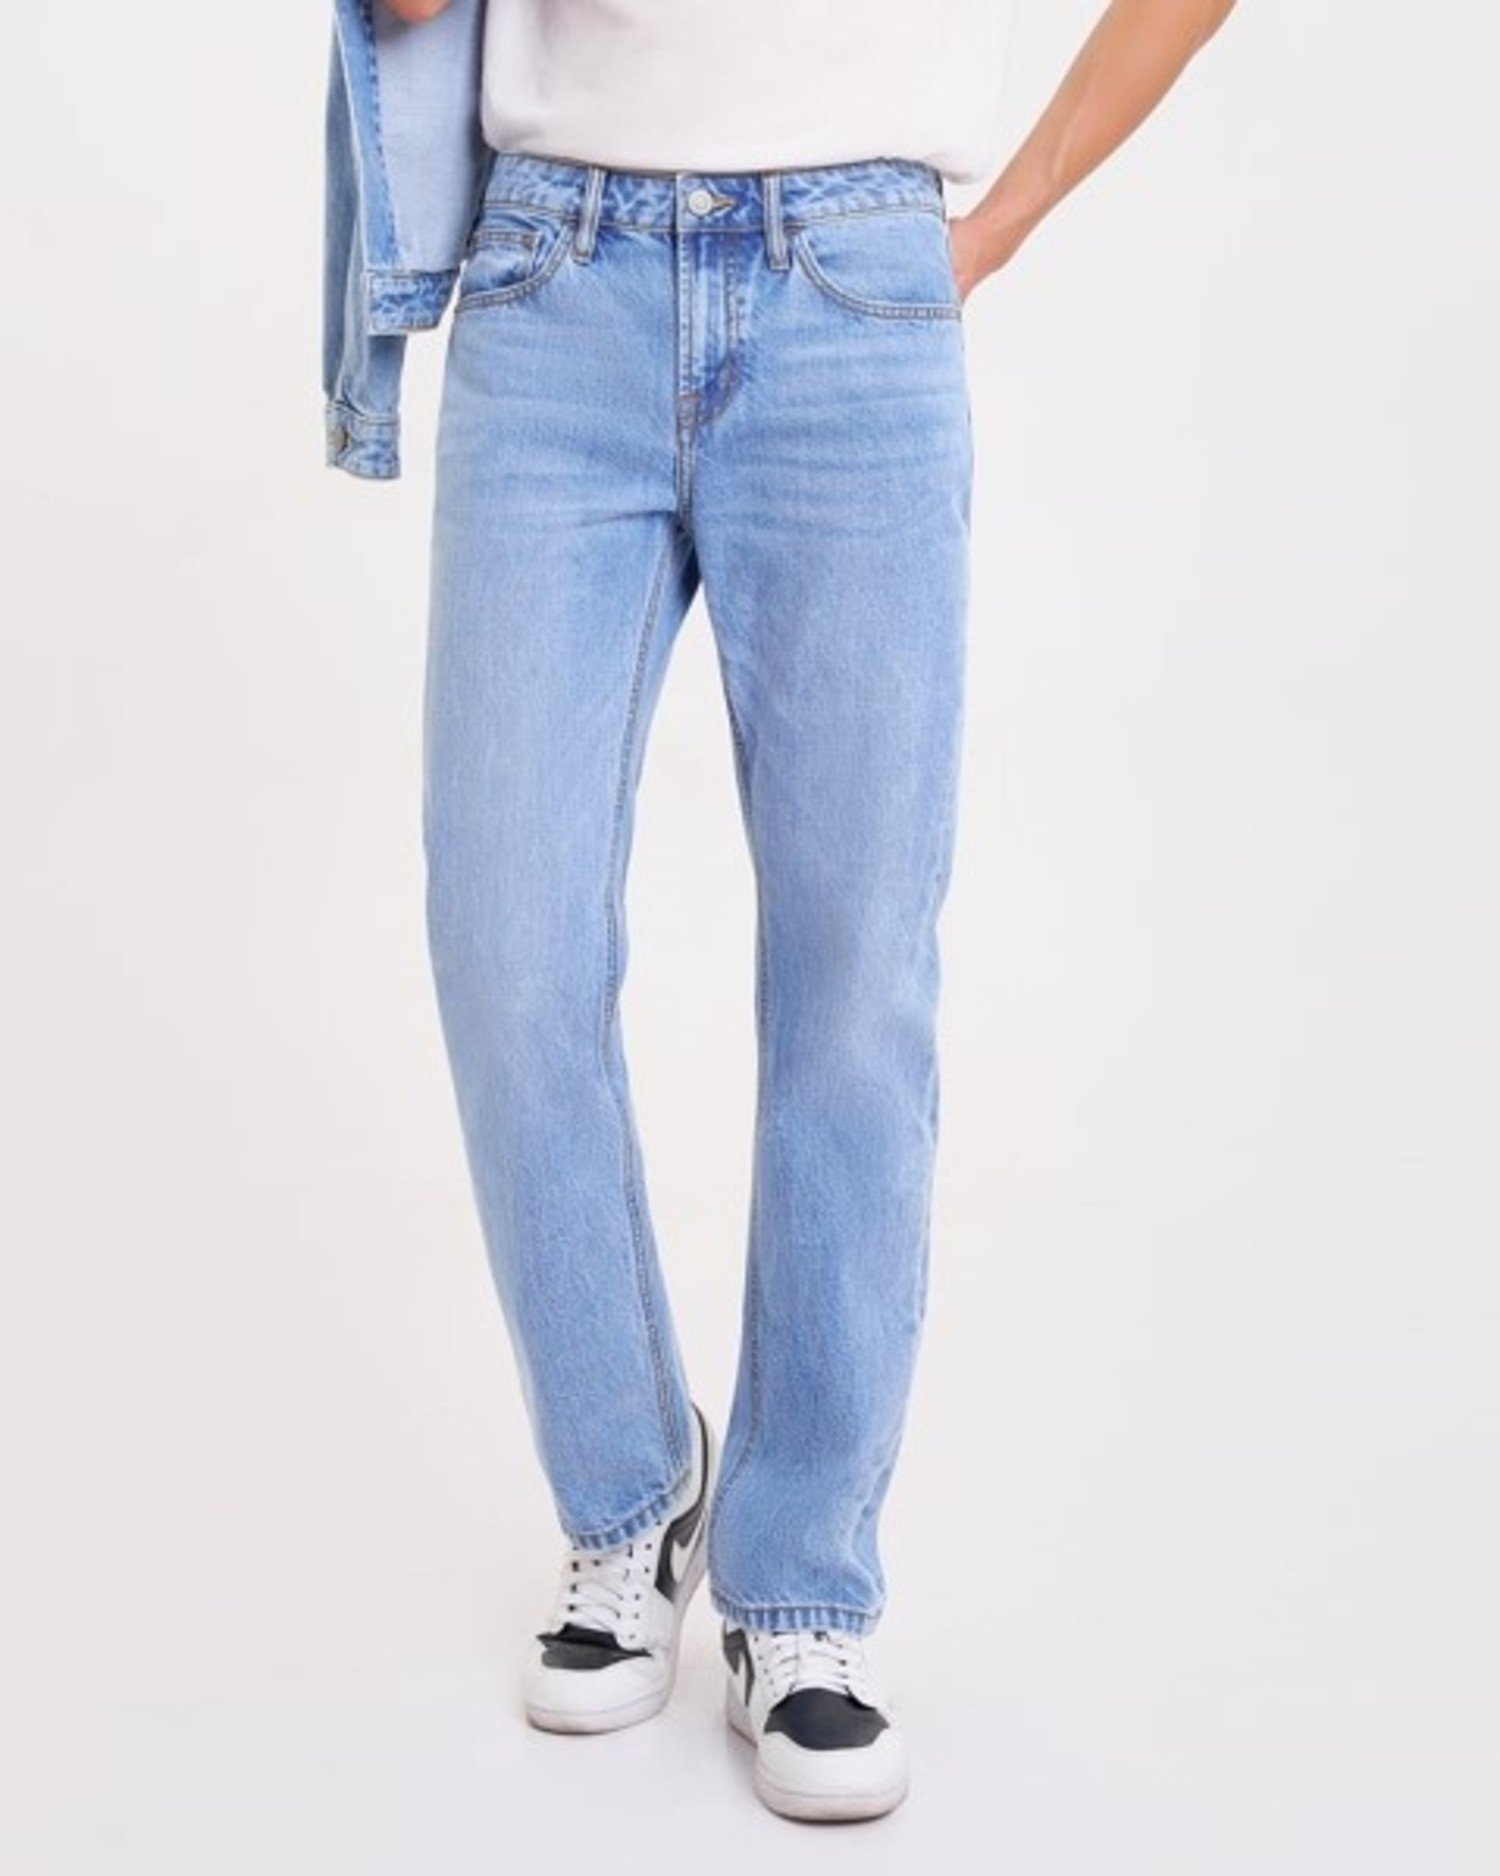 https://cdn.shoplightspeed.com/shops/632629/files/49076004/1500x4000x3/v-sixtyfour-sky-blue-wash-straight-jeans.jpg